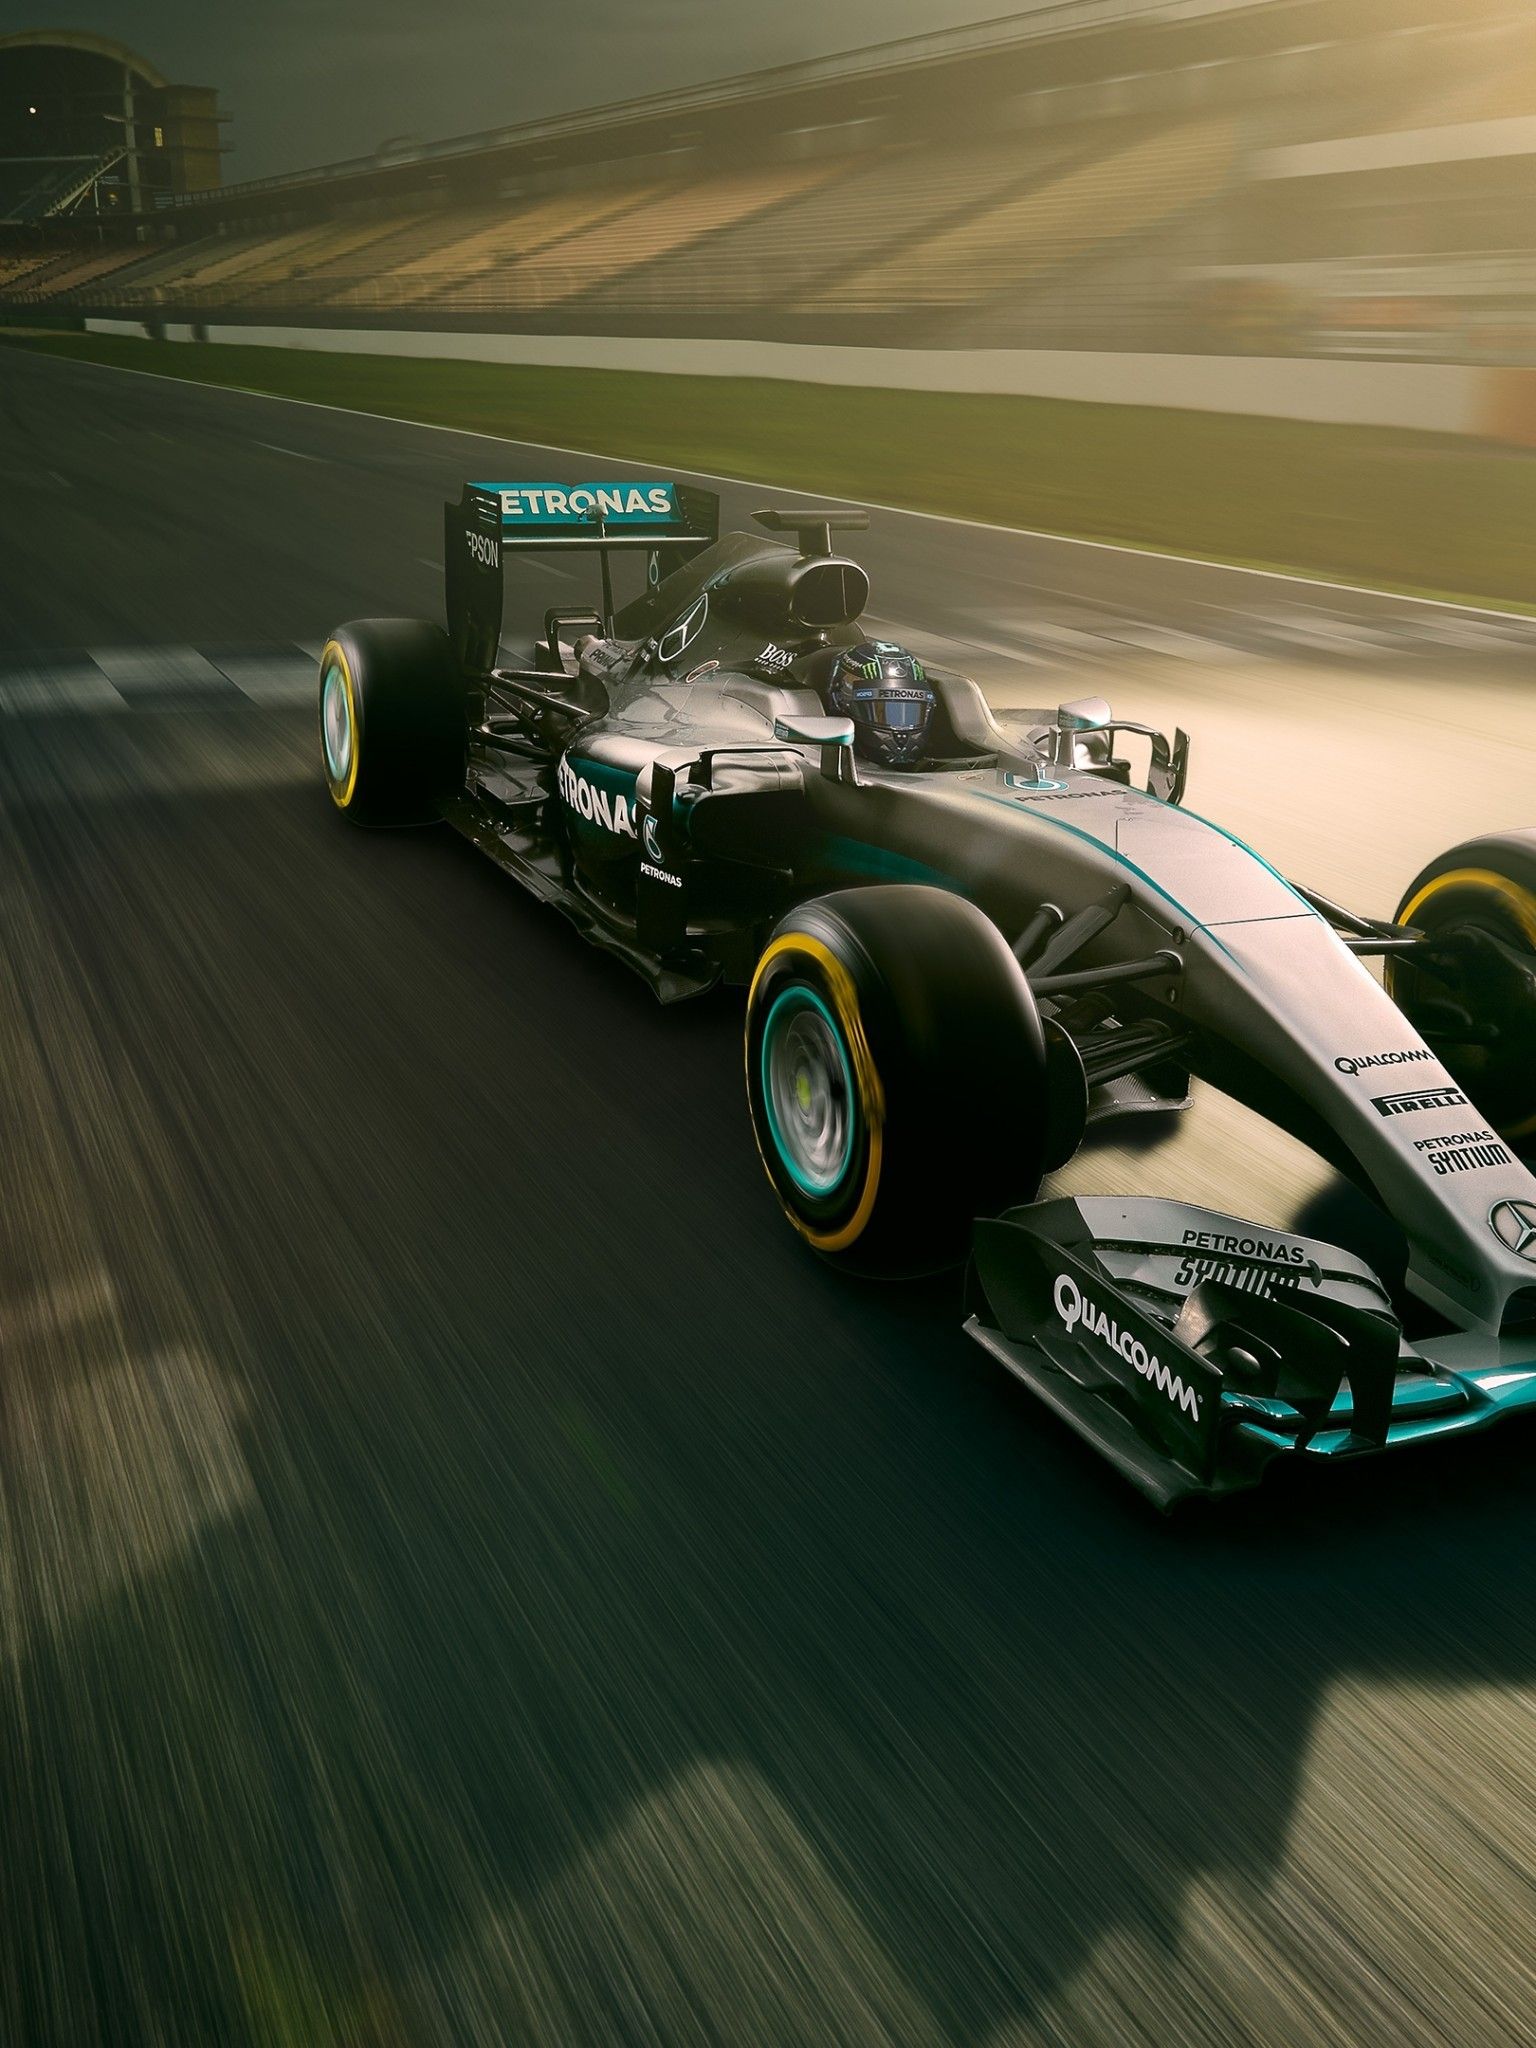 Download 1536x2048 Mercedes Amg Petronas, Formula Racing Cars Wallpaper For Apple IPad Mini, Apple IPad 4